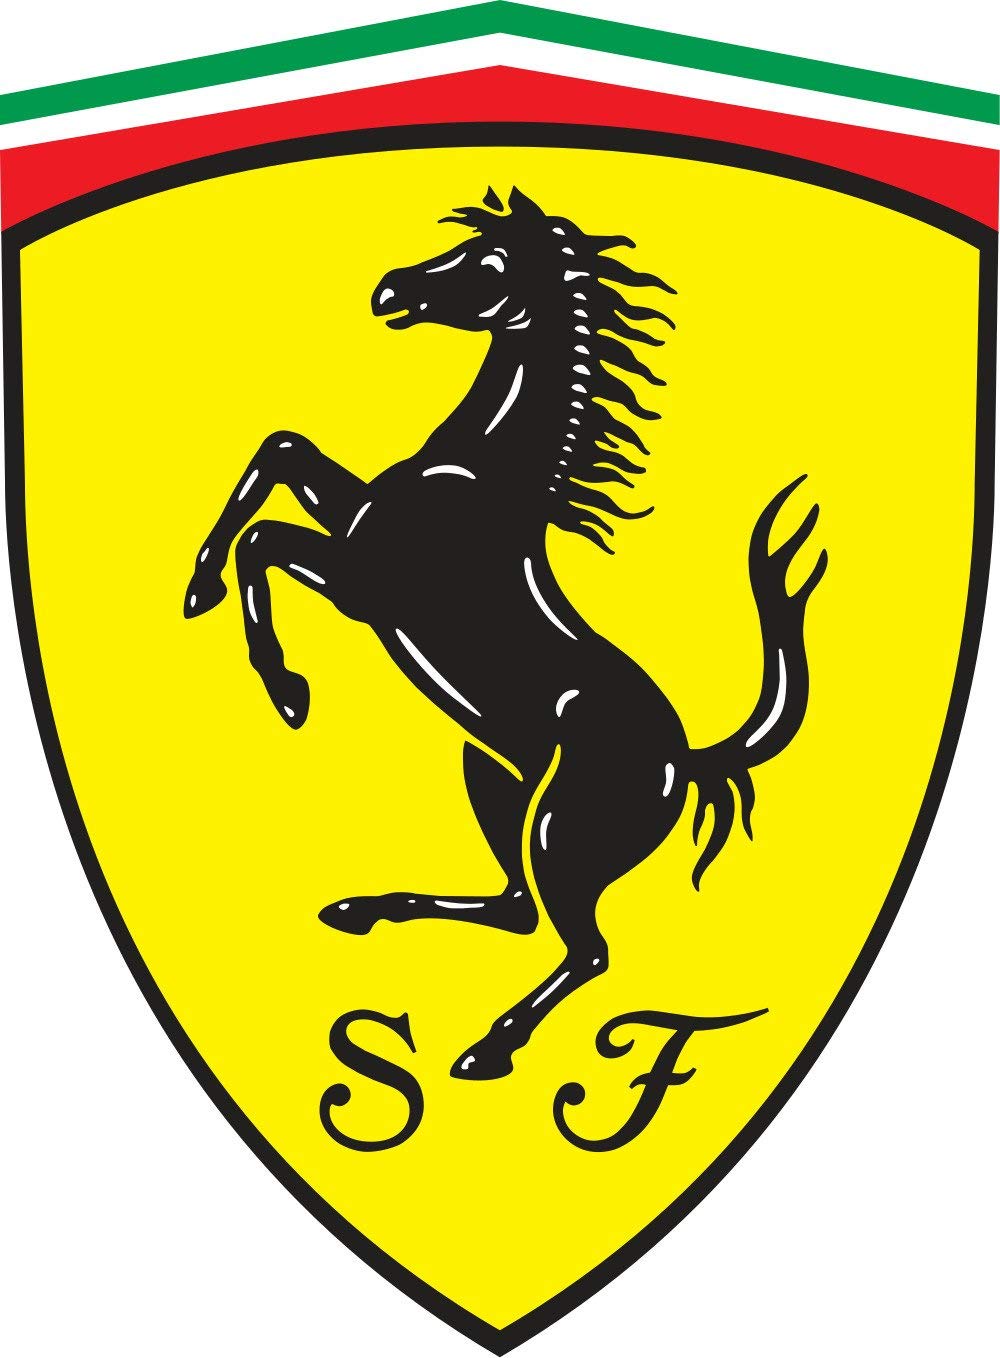 Ferrari Logo Black Prancing Horse Yellow Background Edible.